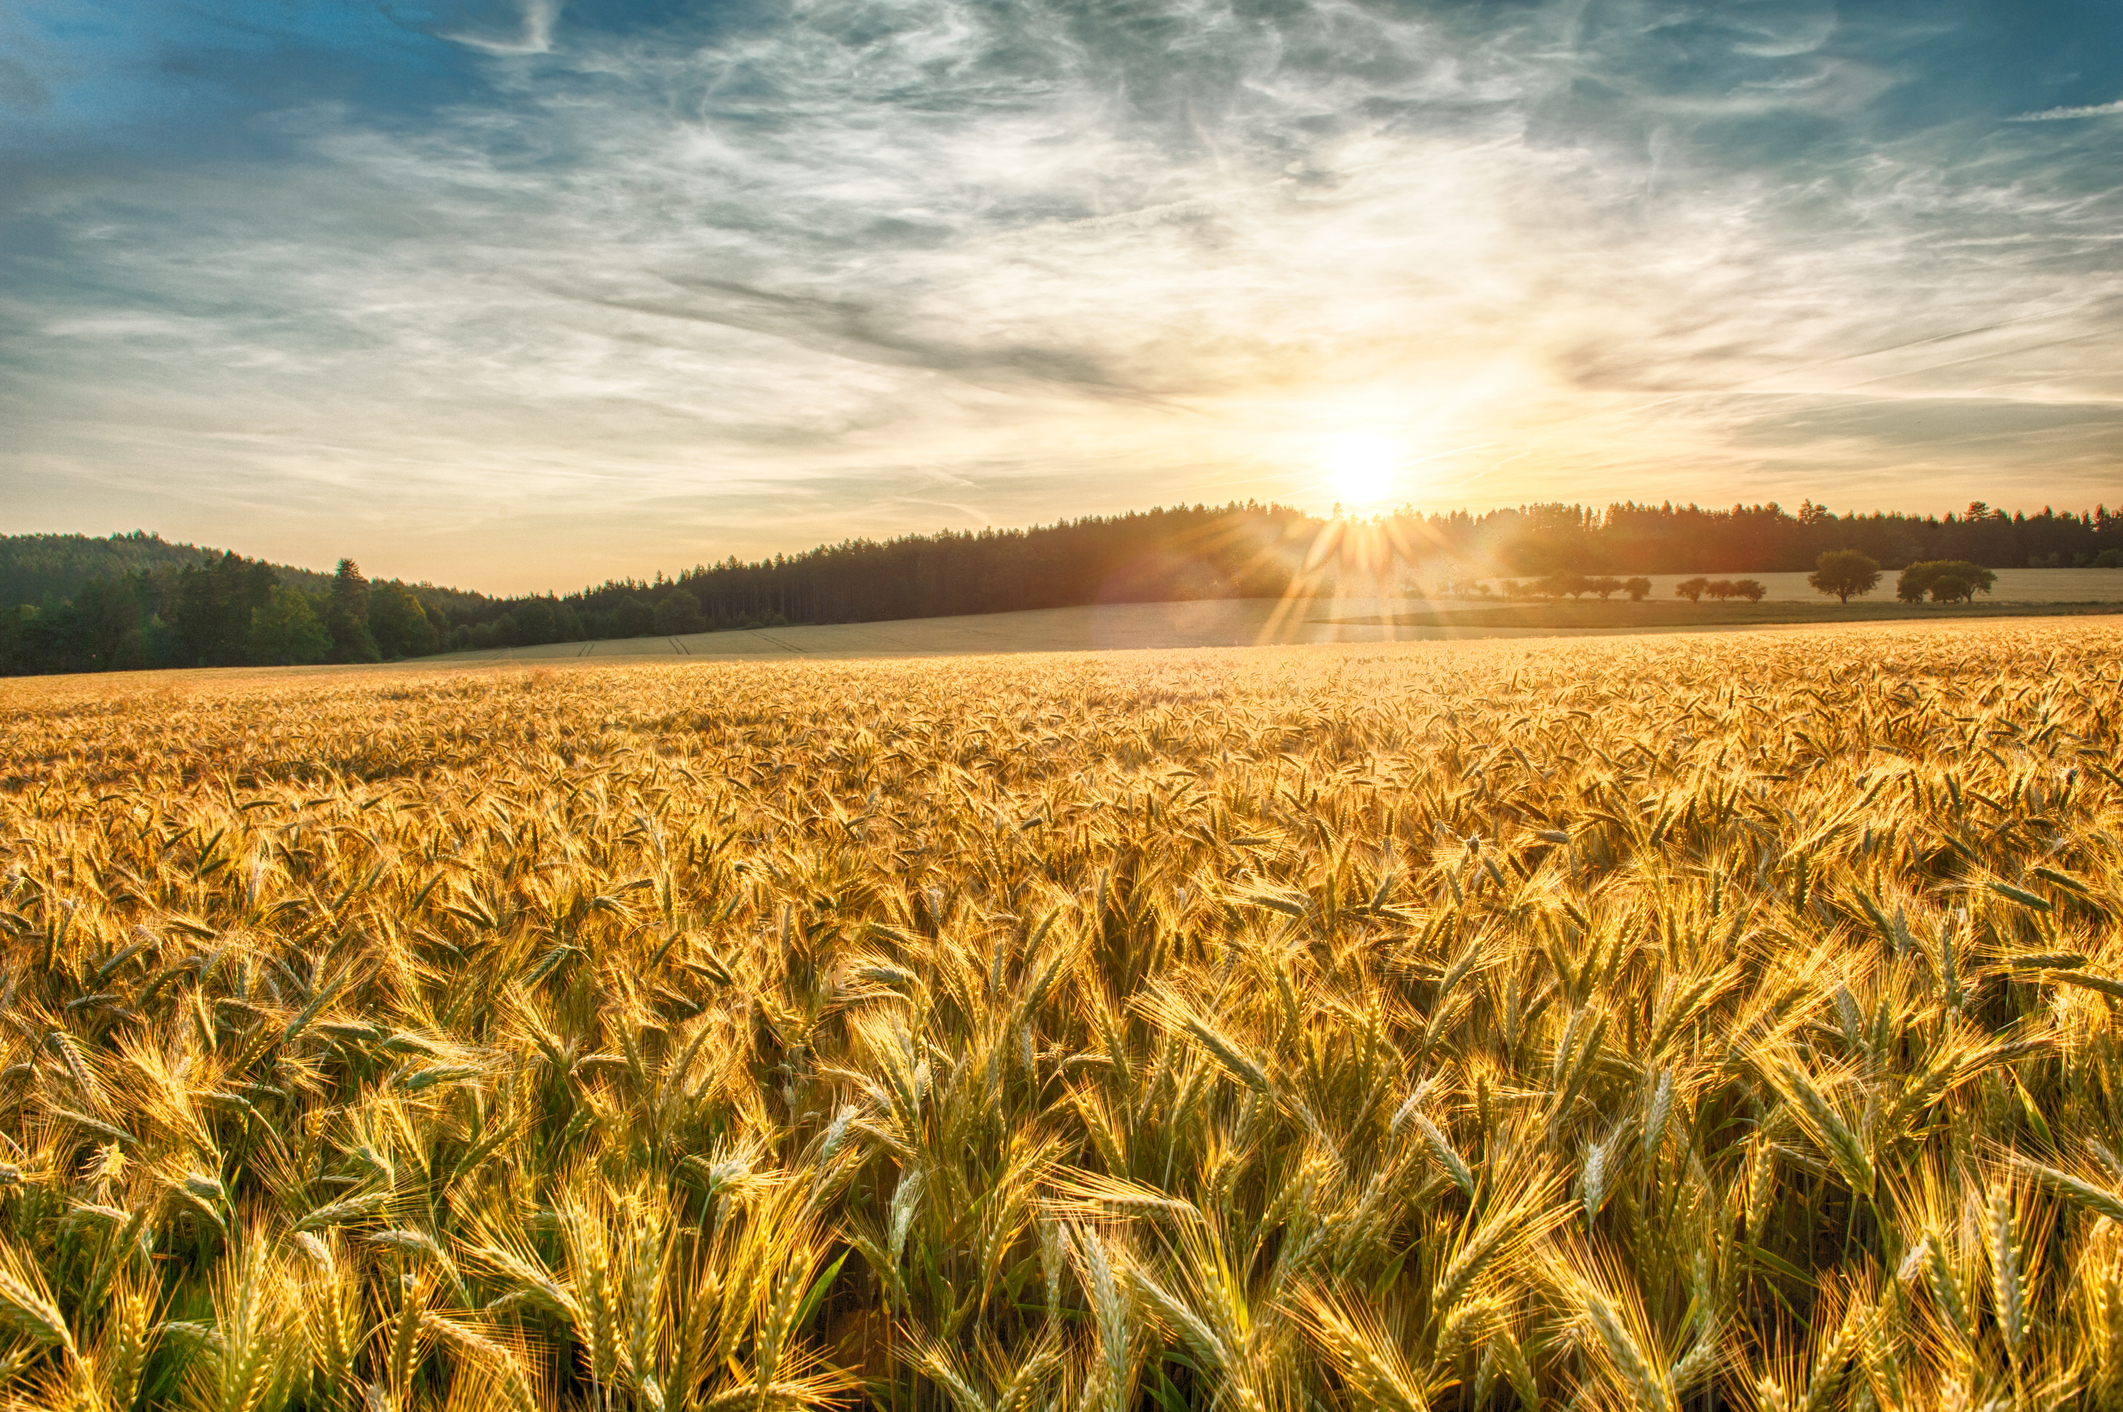 Rural scene of sun setting over the barley field